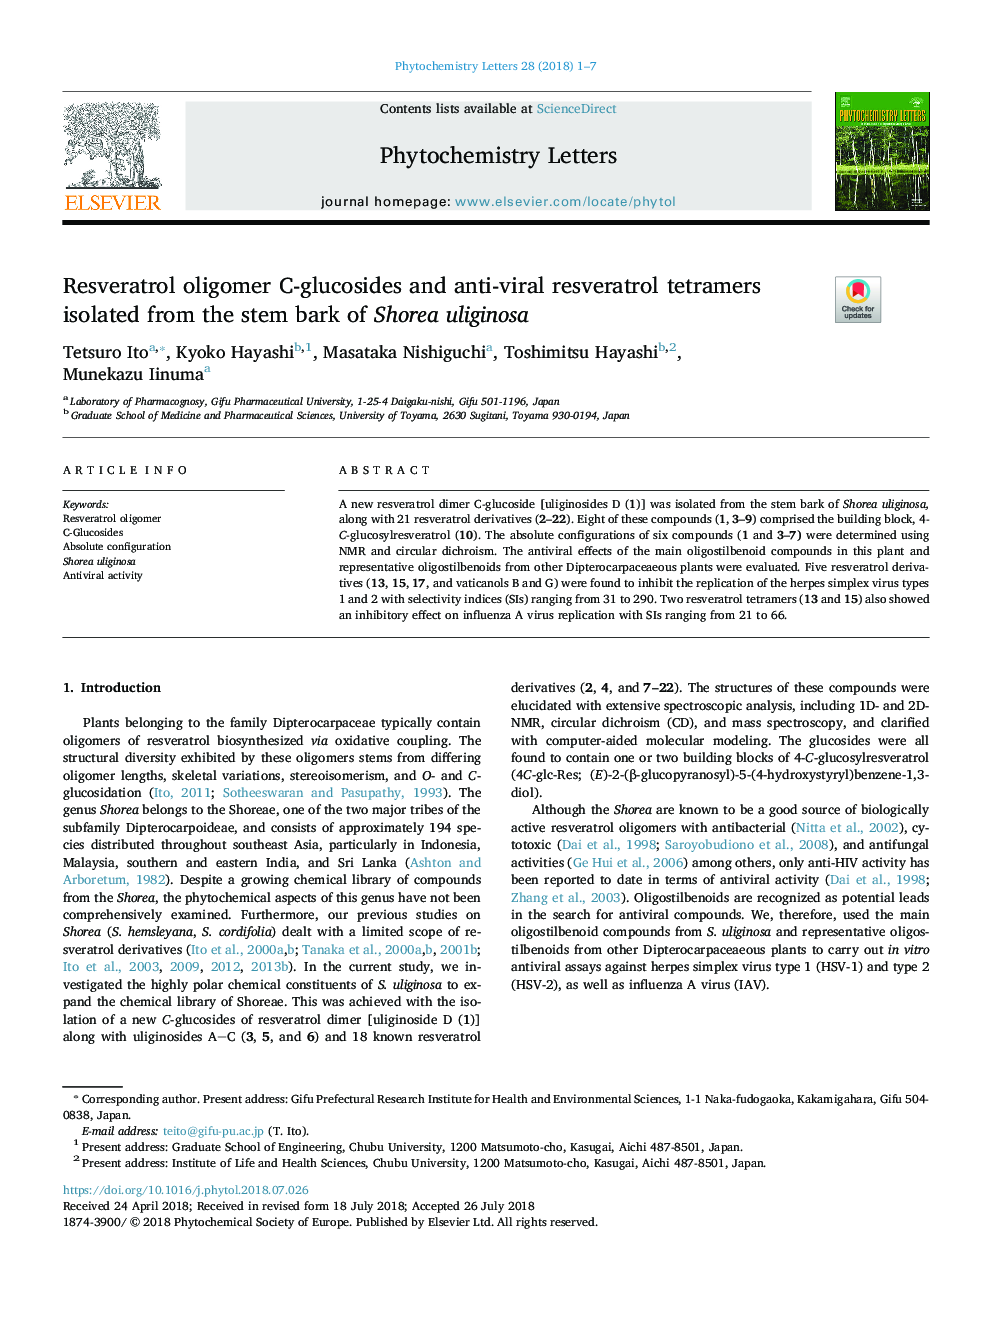 Resveratrol oligomer C-glucosides and anti-viral resveratrol tetramers isolated from the stem bark of Shorea uliginosa